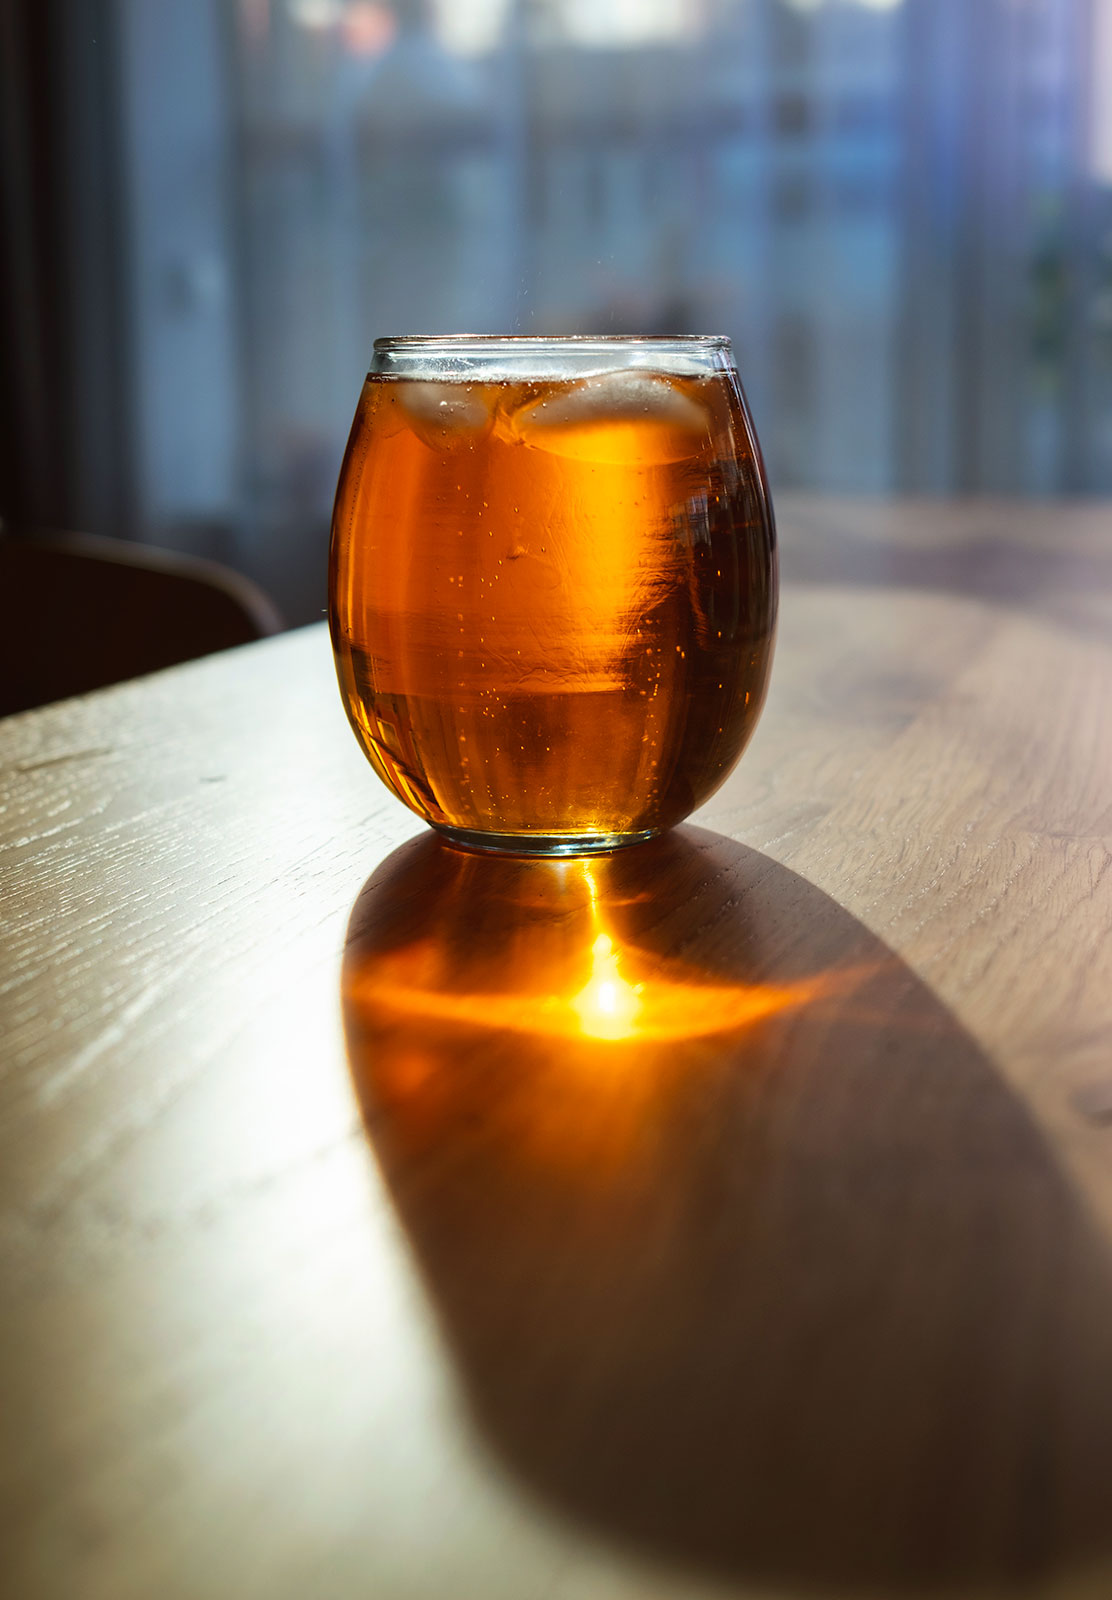 Orange drink in glass